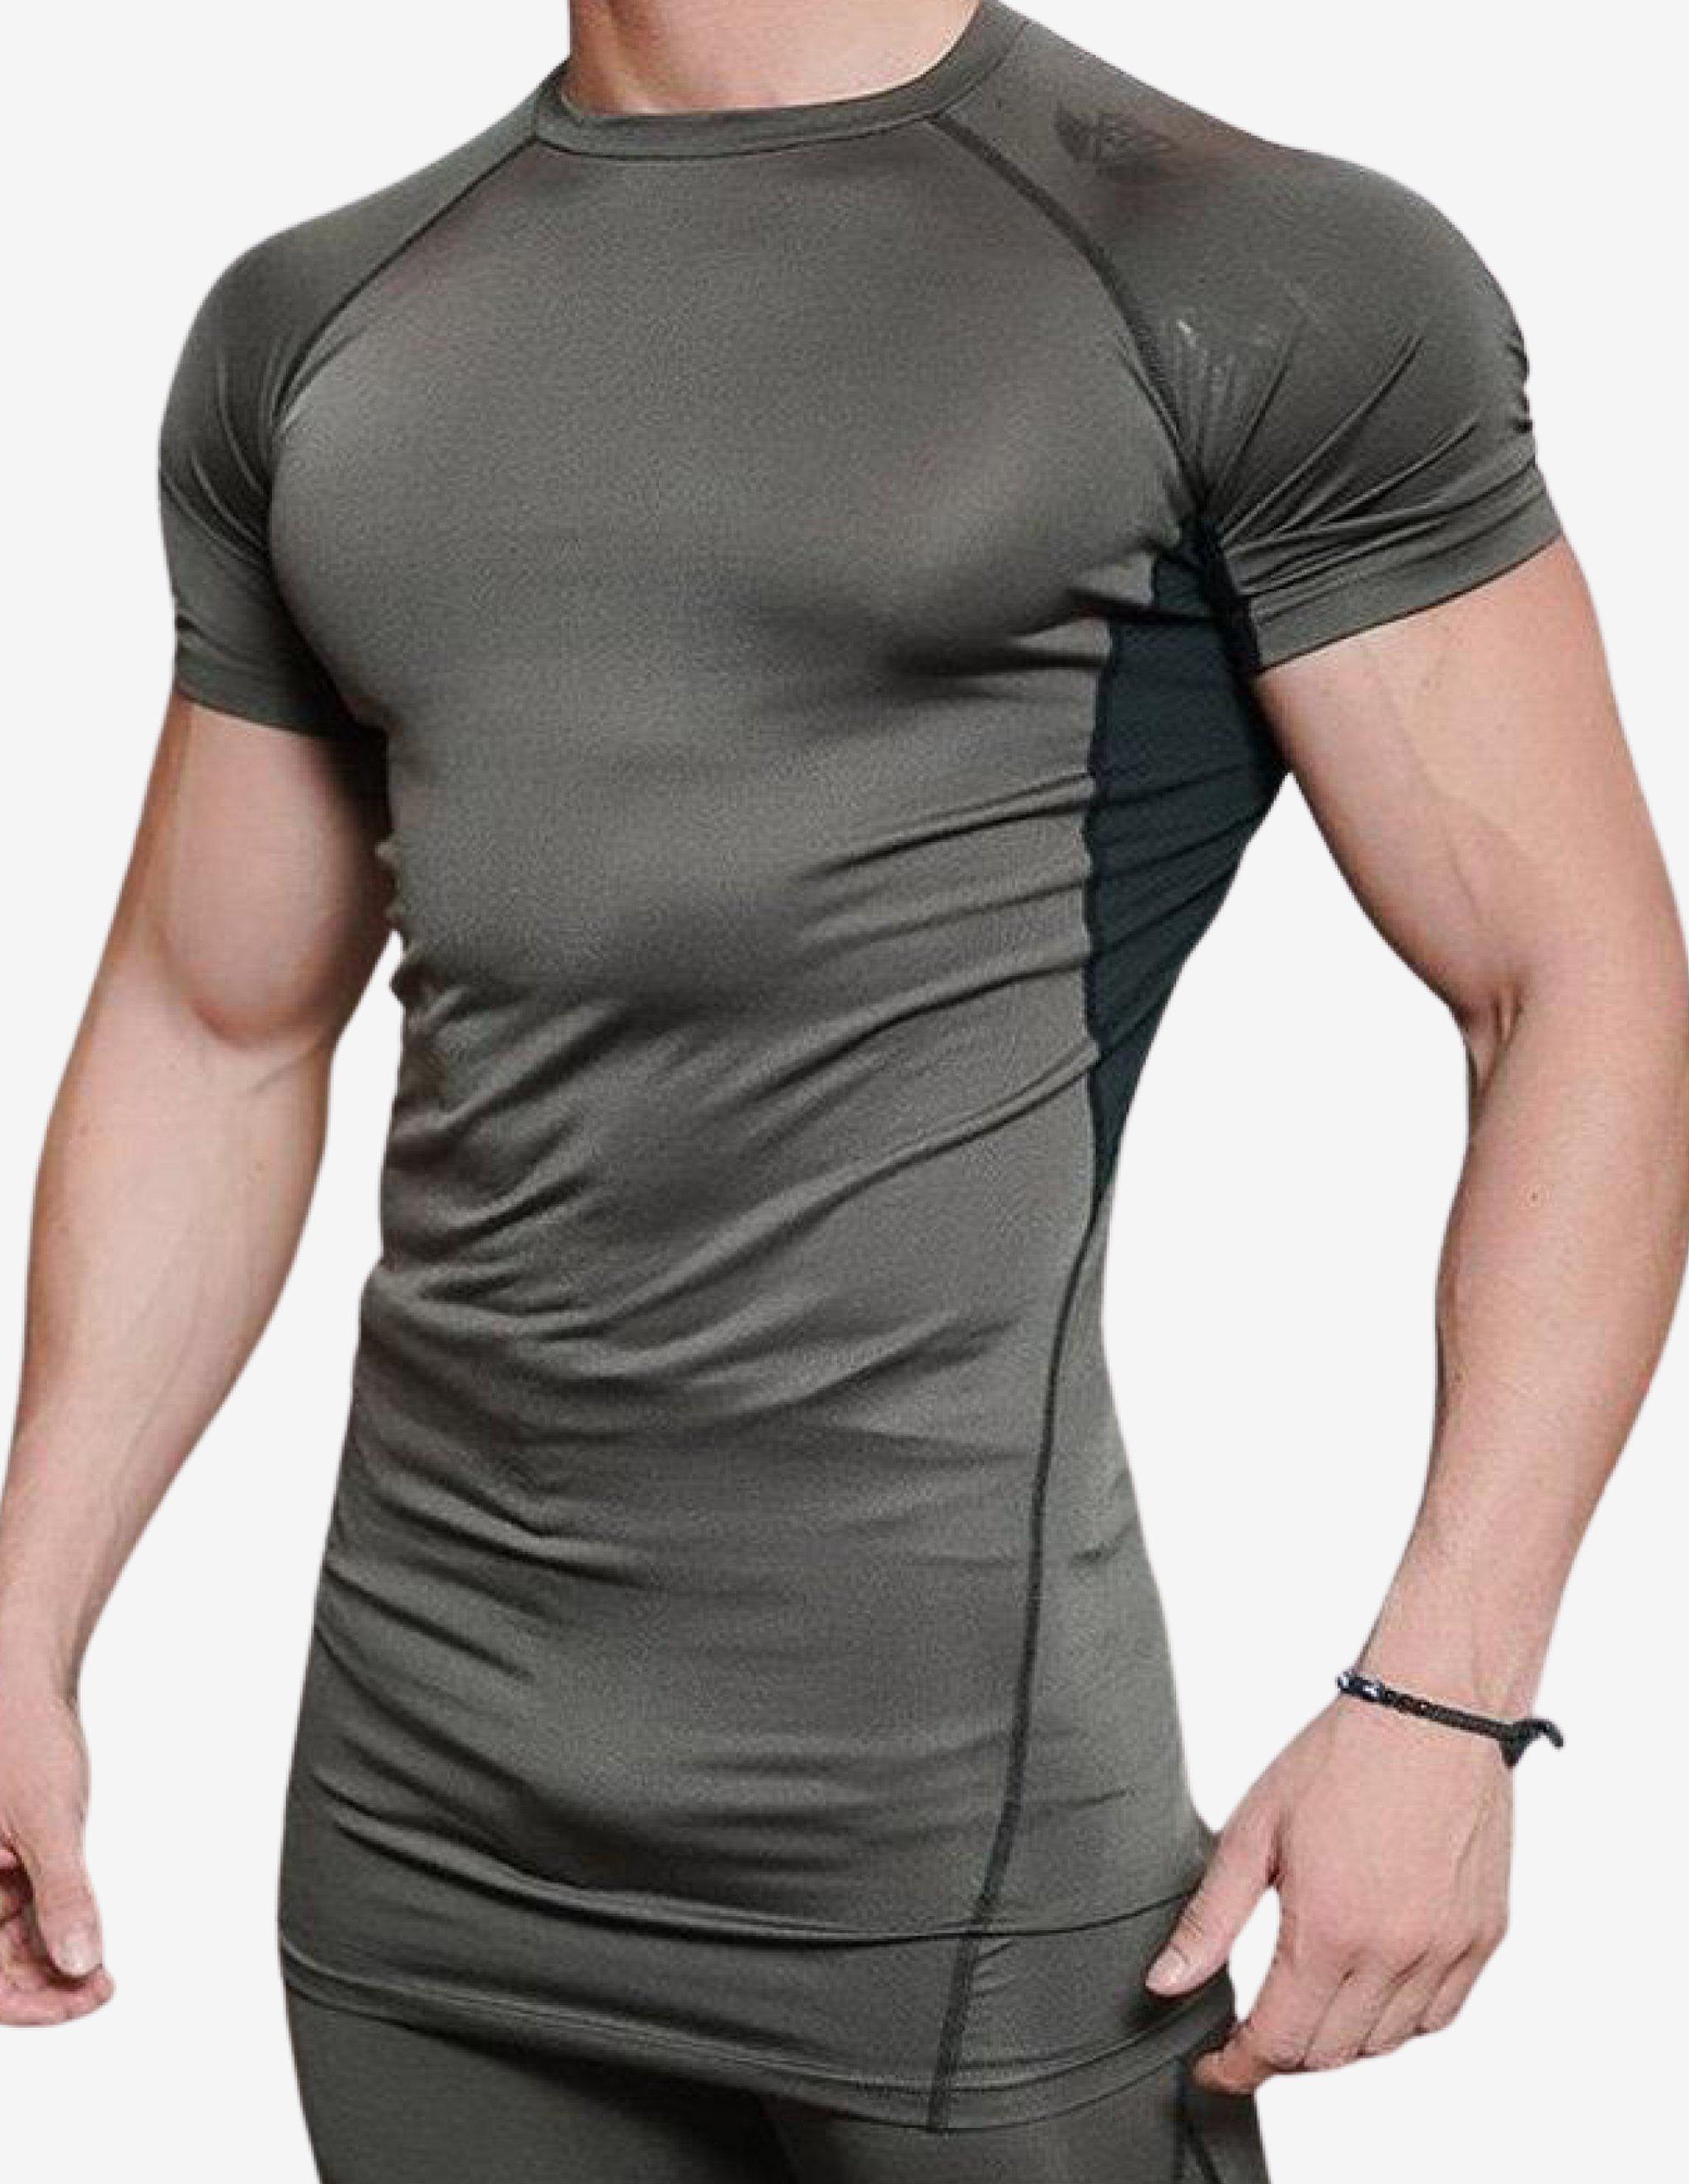 VENTUS Short sleeve Top – Army Green-T-shirt Man-Body Engineers-Guru Muscle